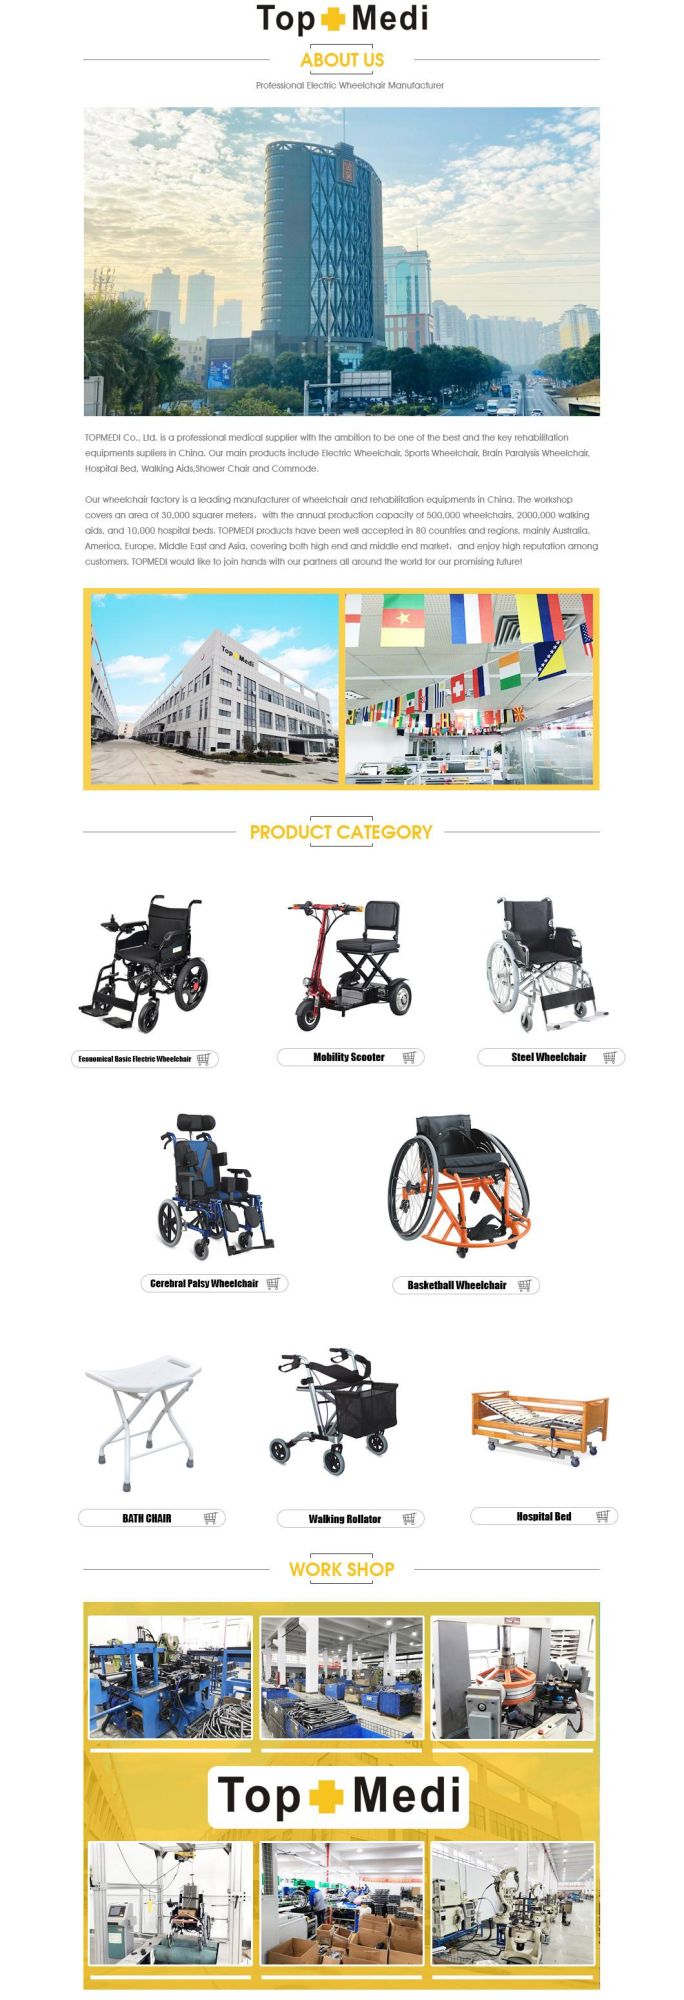 Foshan Export Aluminum Standard Wheelchairs